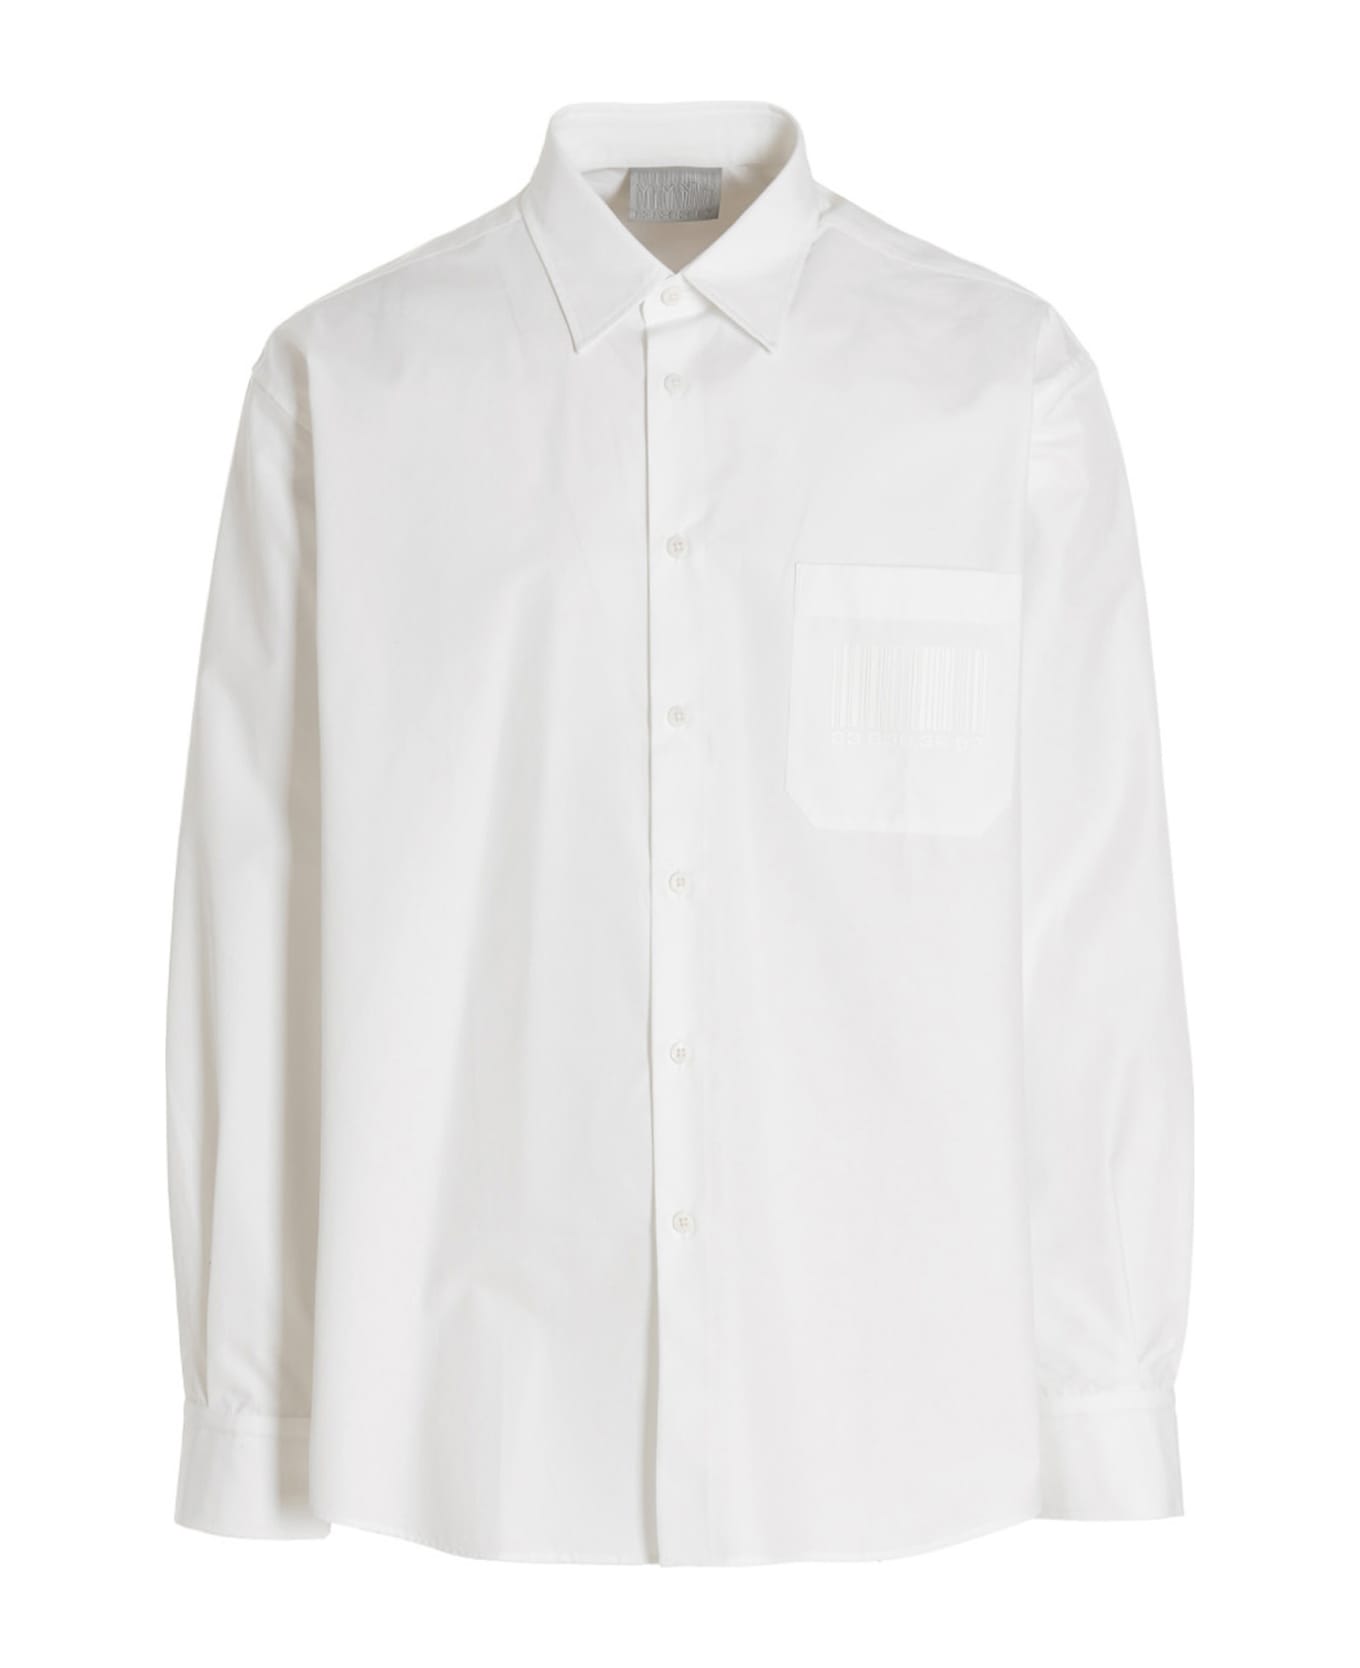 VTMNTS 'barcode' Shirt - White